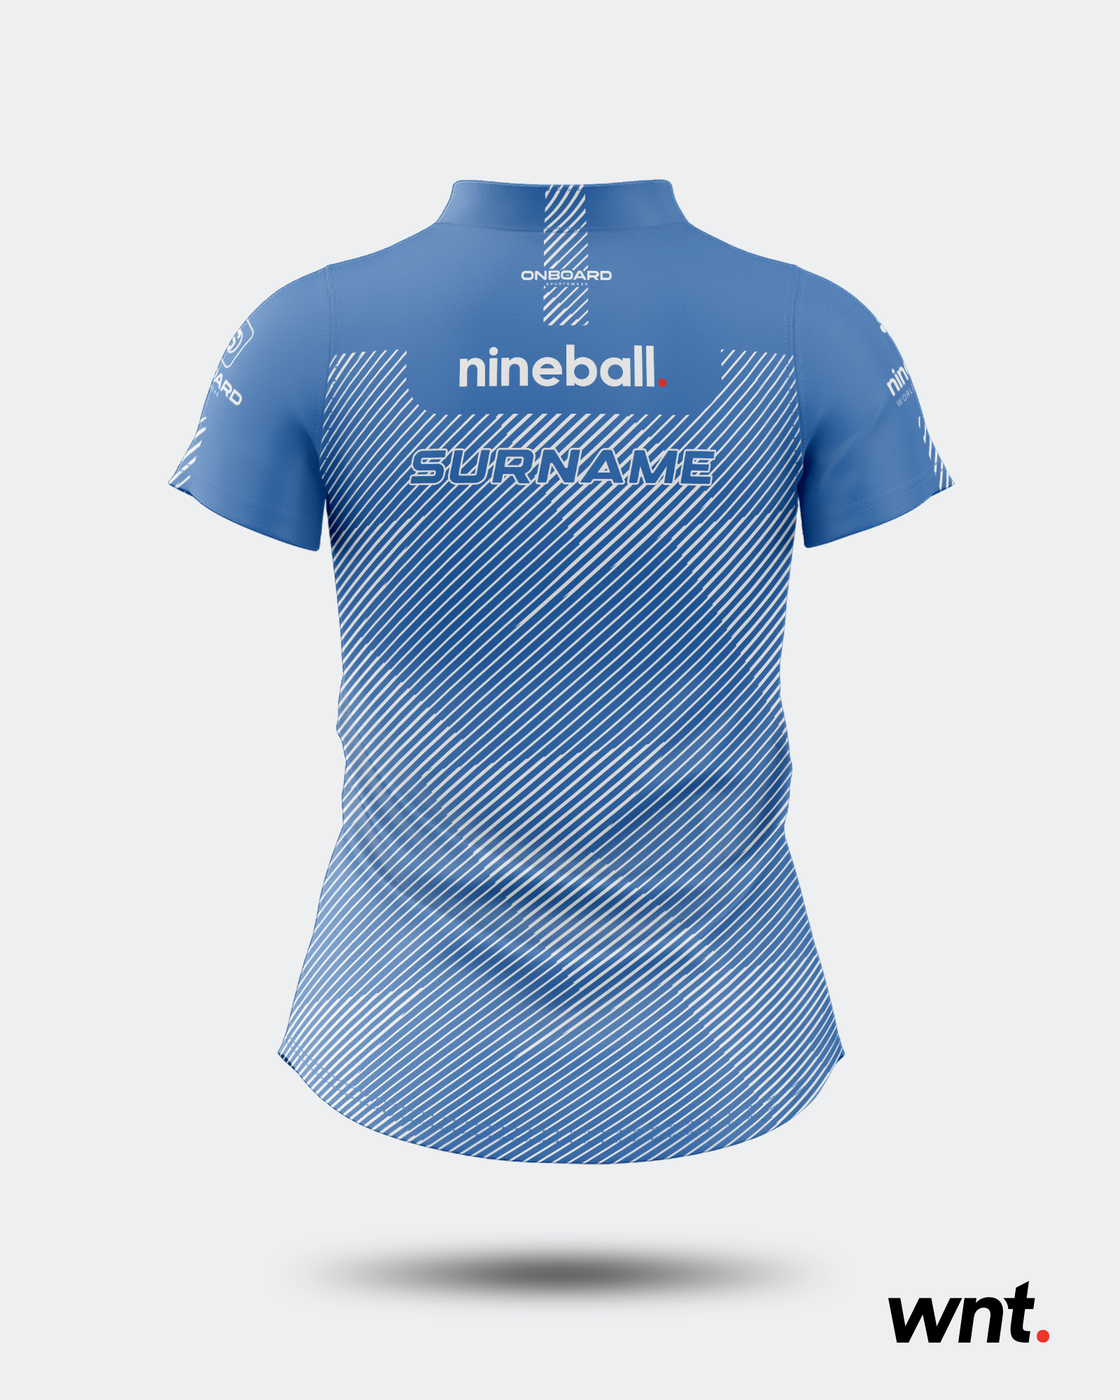 Essential Nineball-Trikot für Damen – Himmelblau